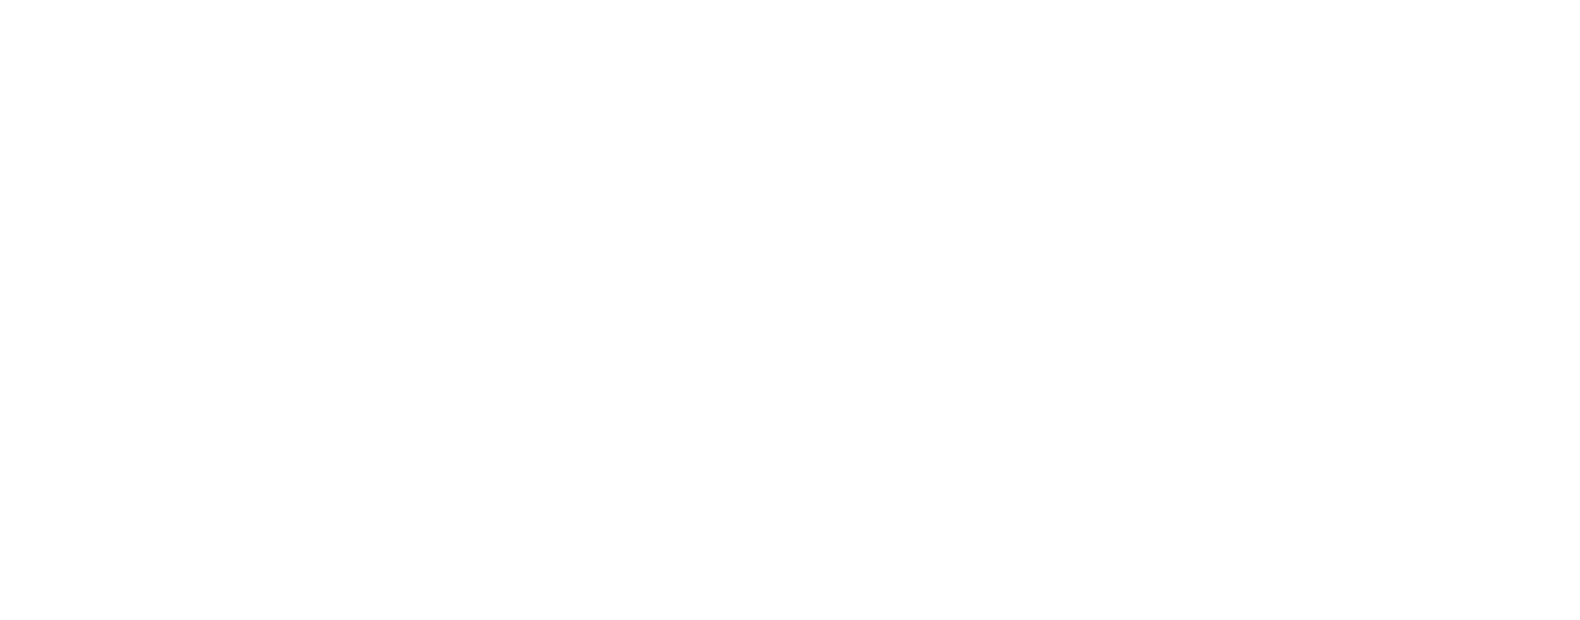 Modern Reformation logo